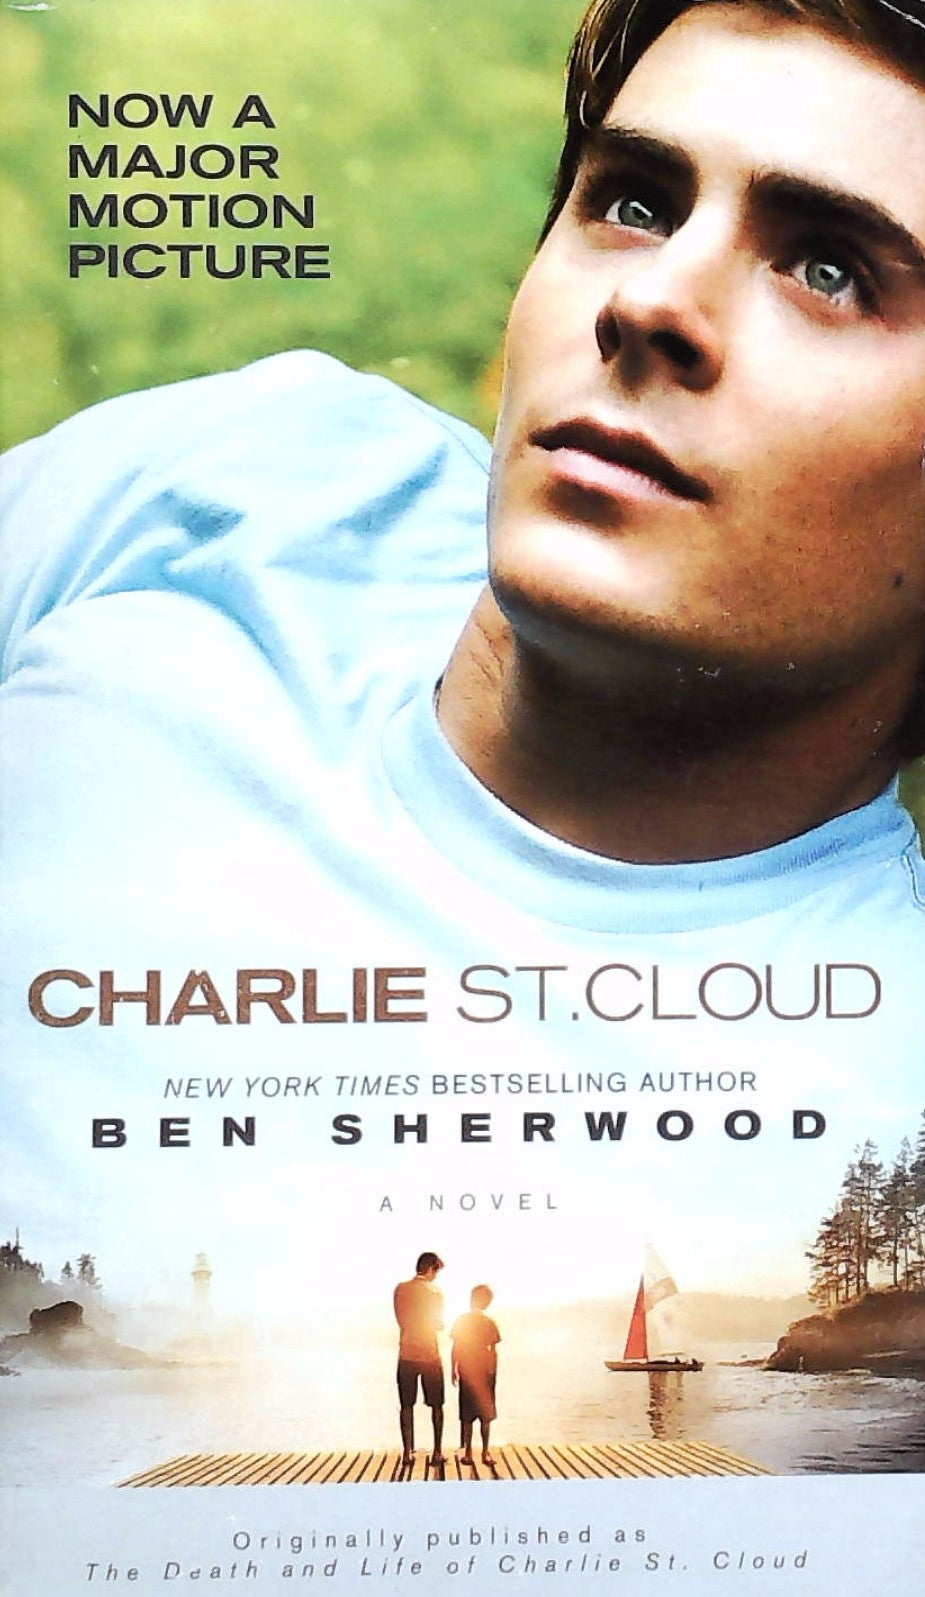 Livre ISBN 0553584022 Charlie St.Cloud (Ben Sherwood)